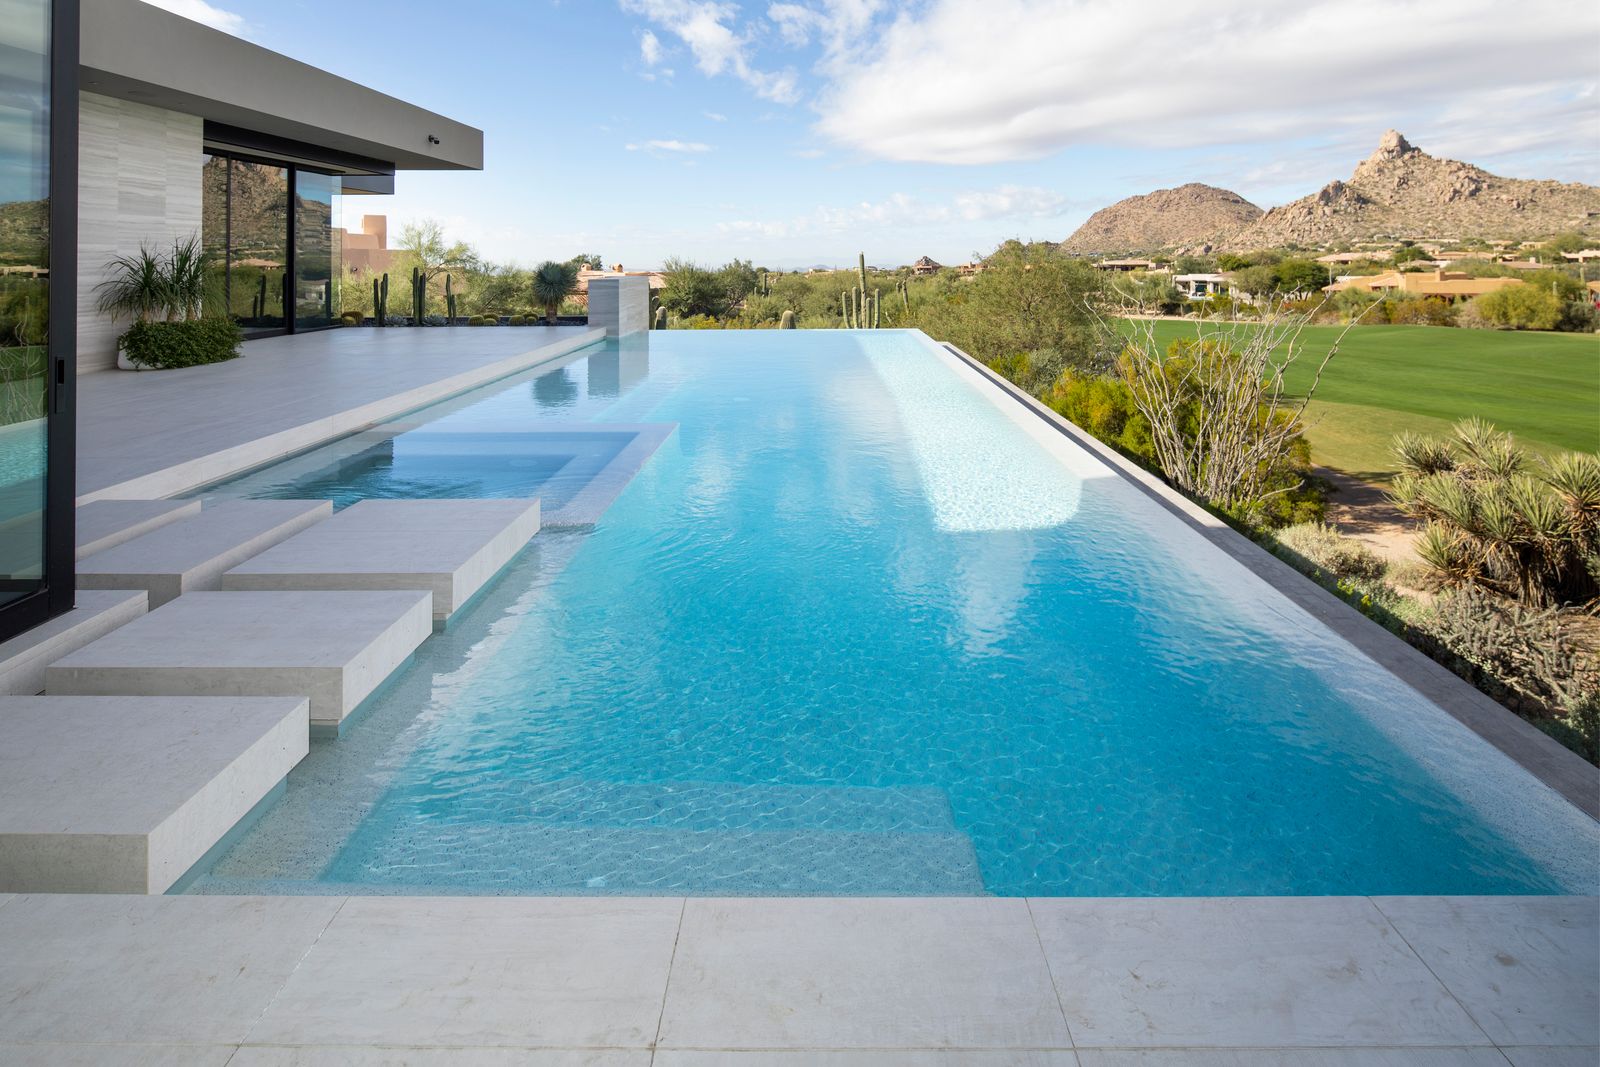 Pool in desert landscape